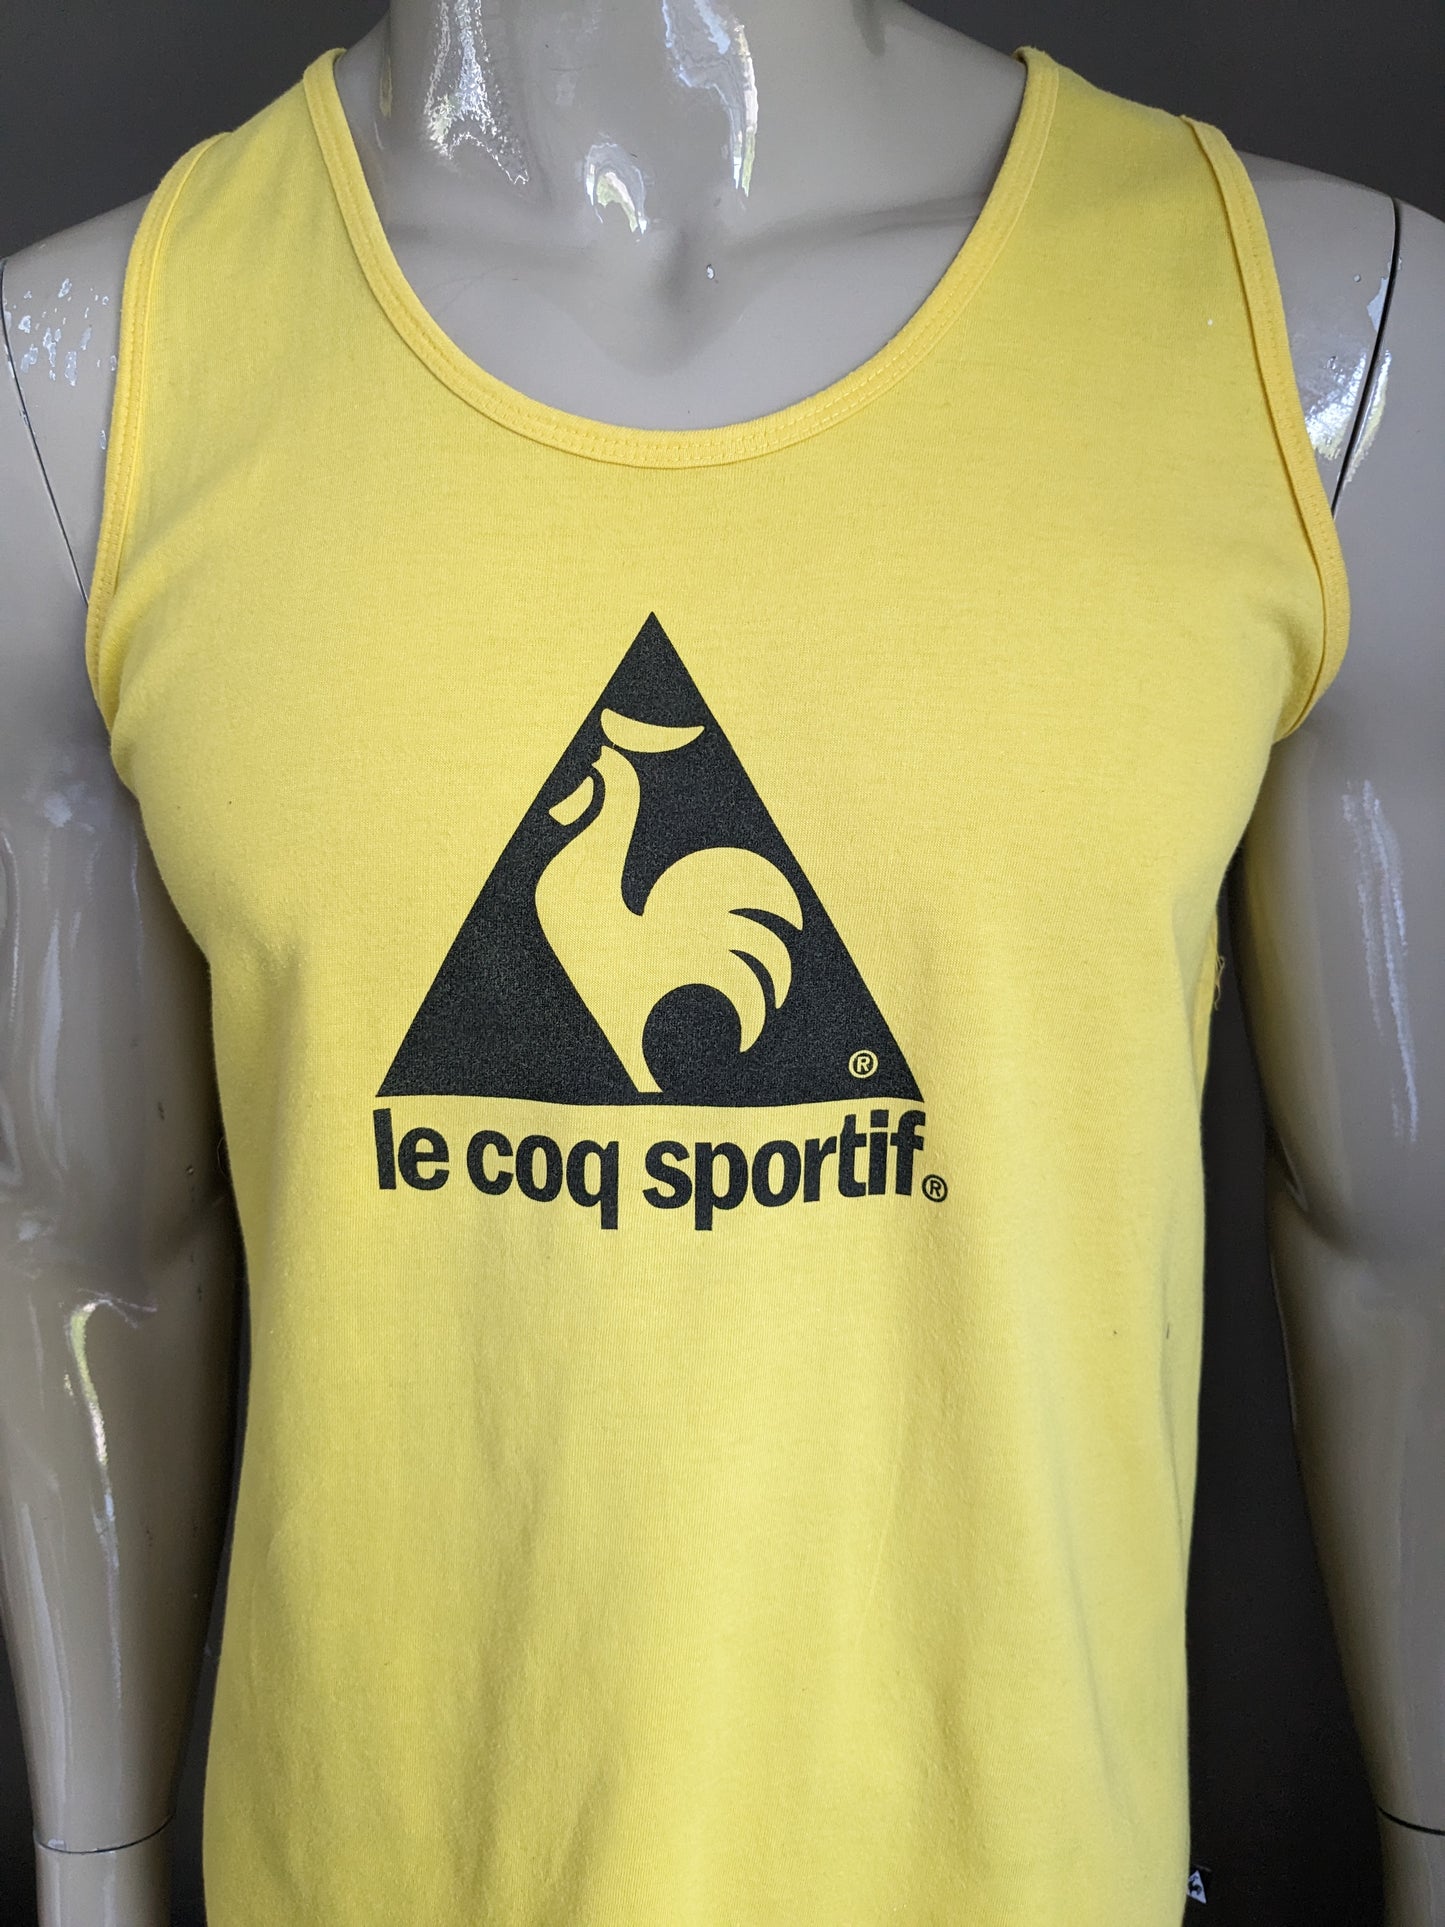 Le Coq Sportif Singlet. Yellow with print. Size L.